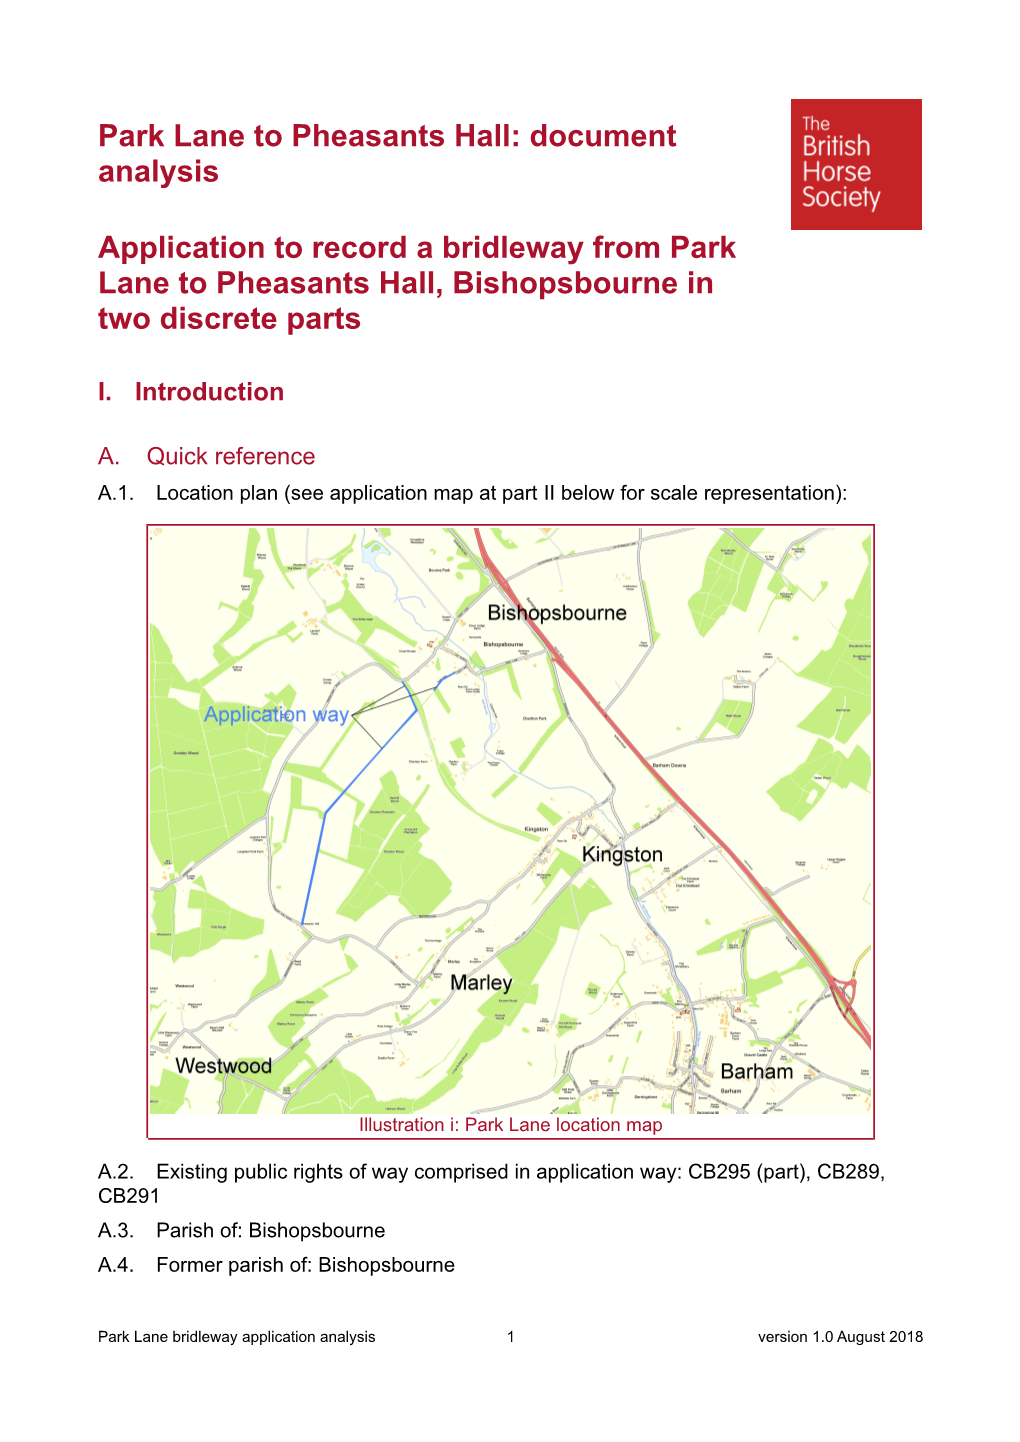 Park Lane Bridleway Application Analysis 1 Version 1.0 August 2018 A.5